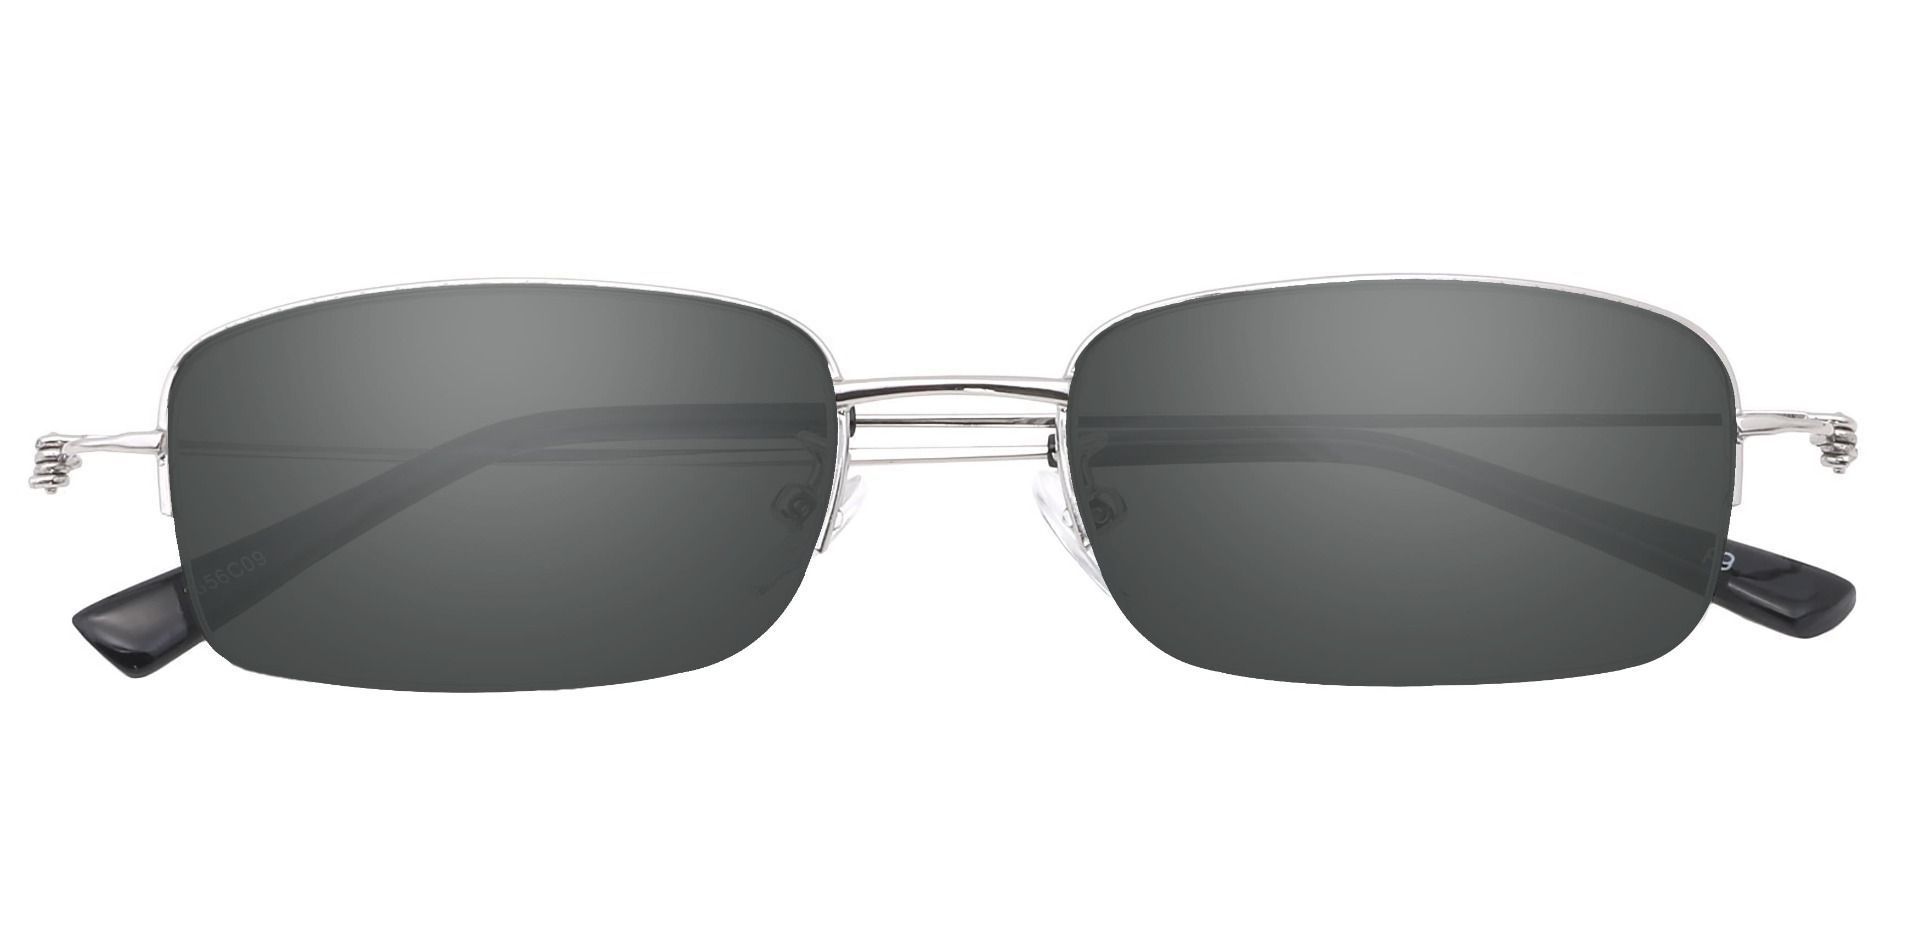 Walton Square Progressive Sunglasses Clear Frame With Gray Lenses Mens Sunglasses Payne